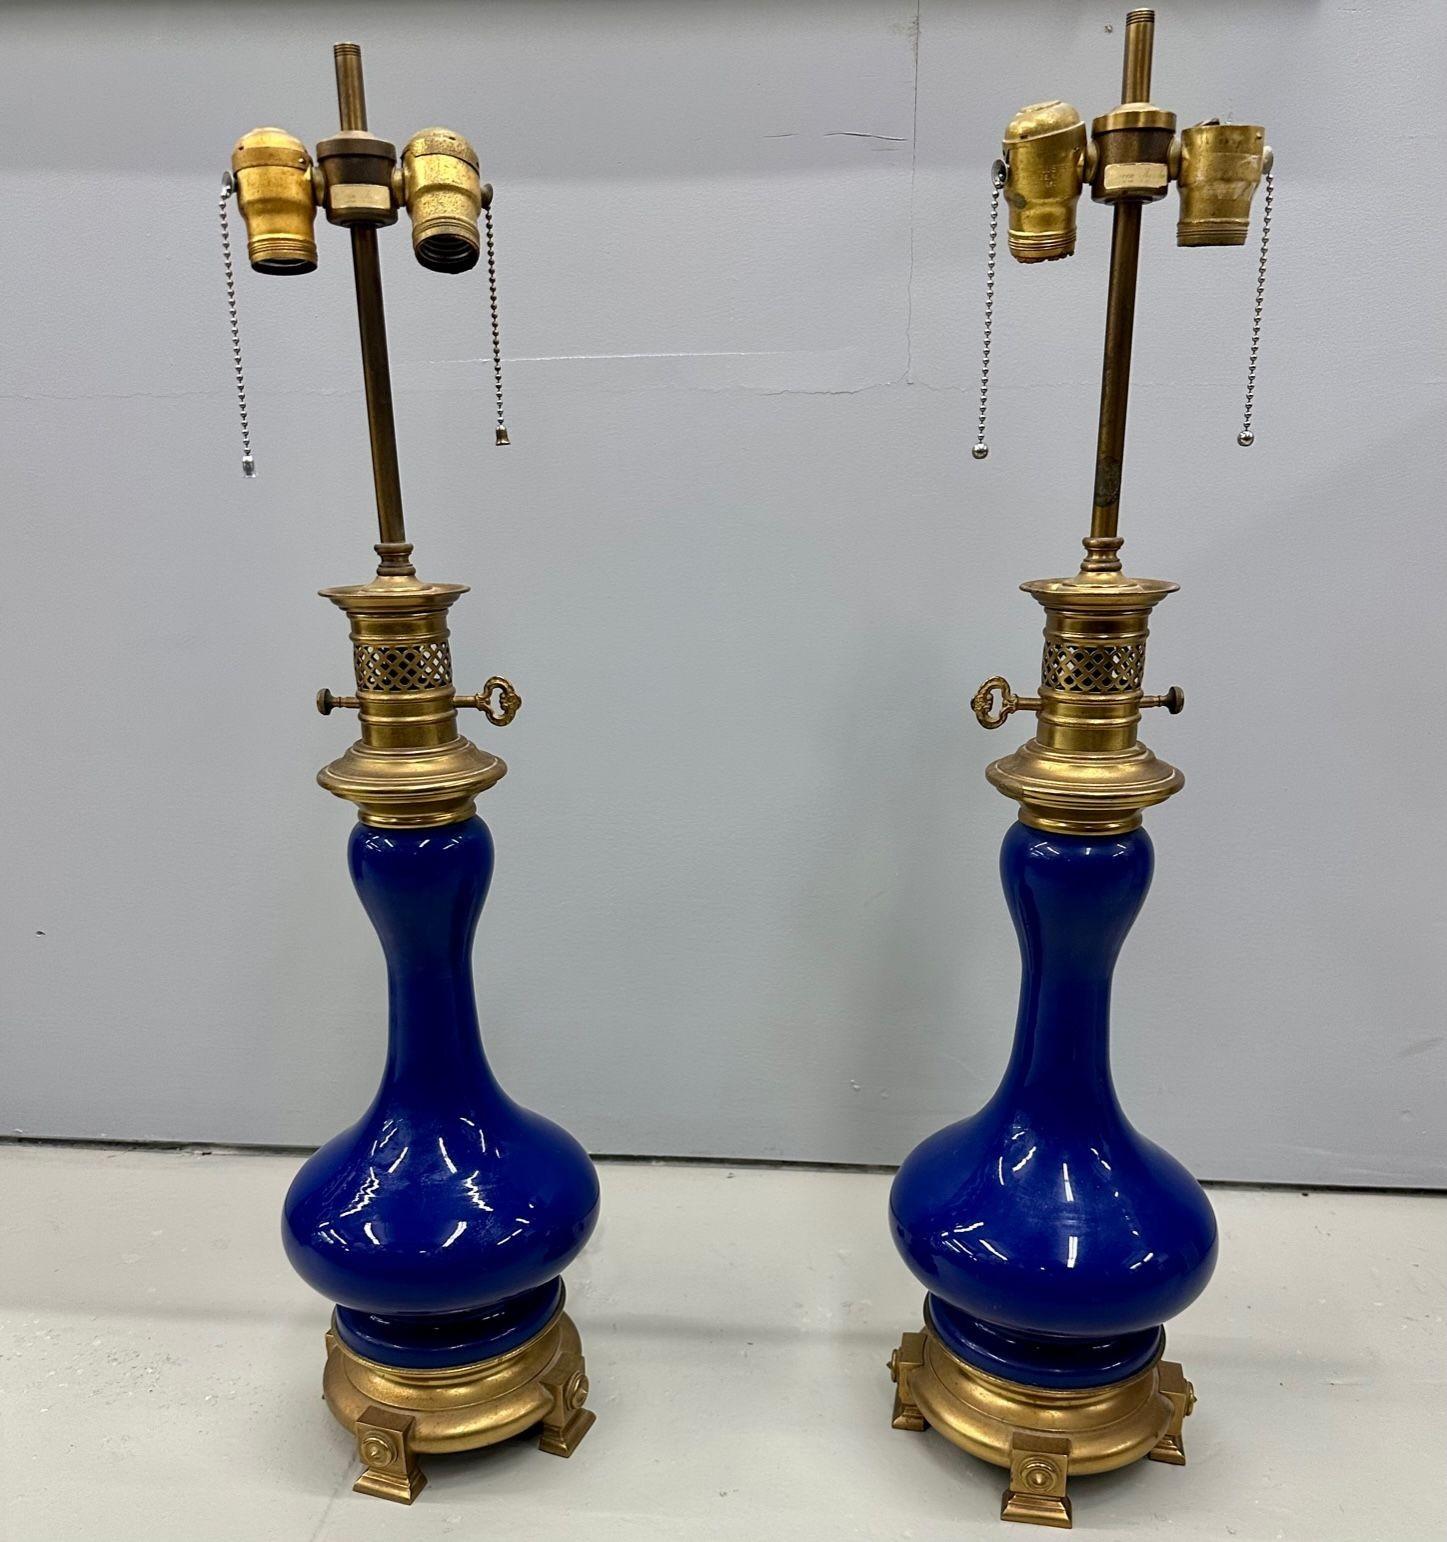 Vintage Pair of Cobalt Blue Warren Kessler Porcelain Table Lamps, Brass, Labeled
Each having a fine rich cobalt blu color having an oil lantern form with bronze table base and mounts. The whole having a boubous form. 